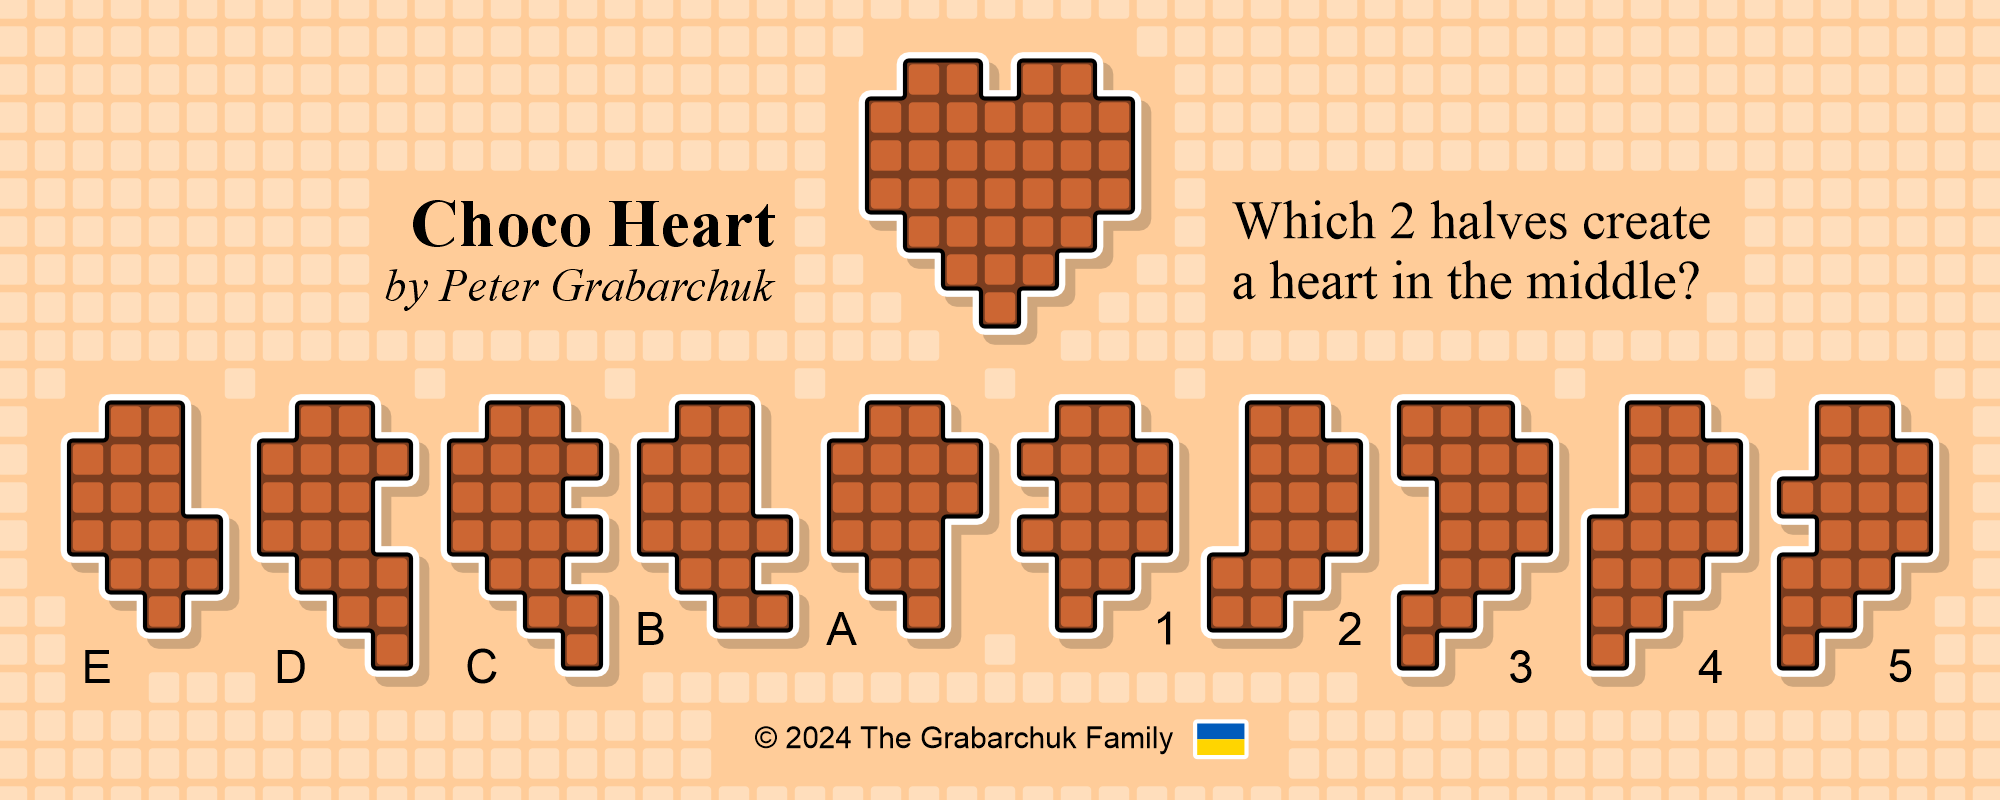 Choco Heart by Peter Grabarchuk